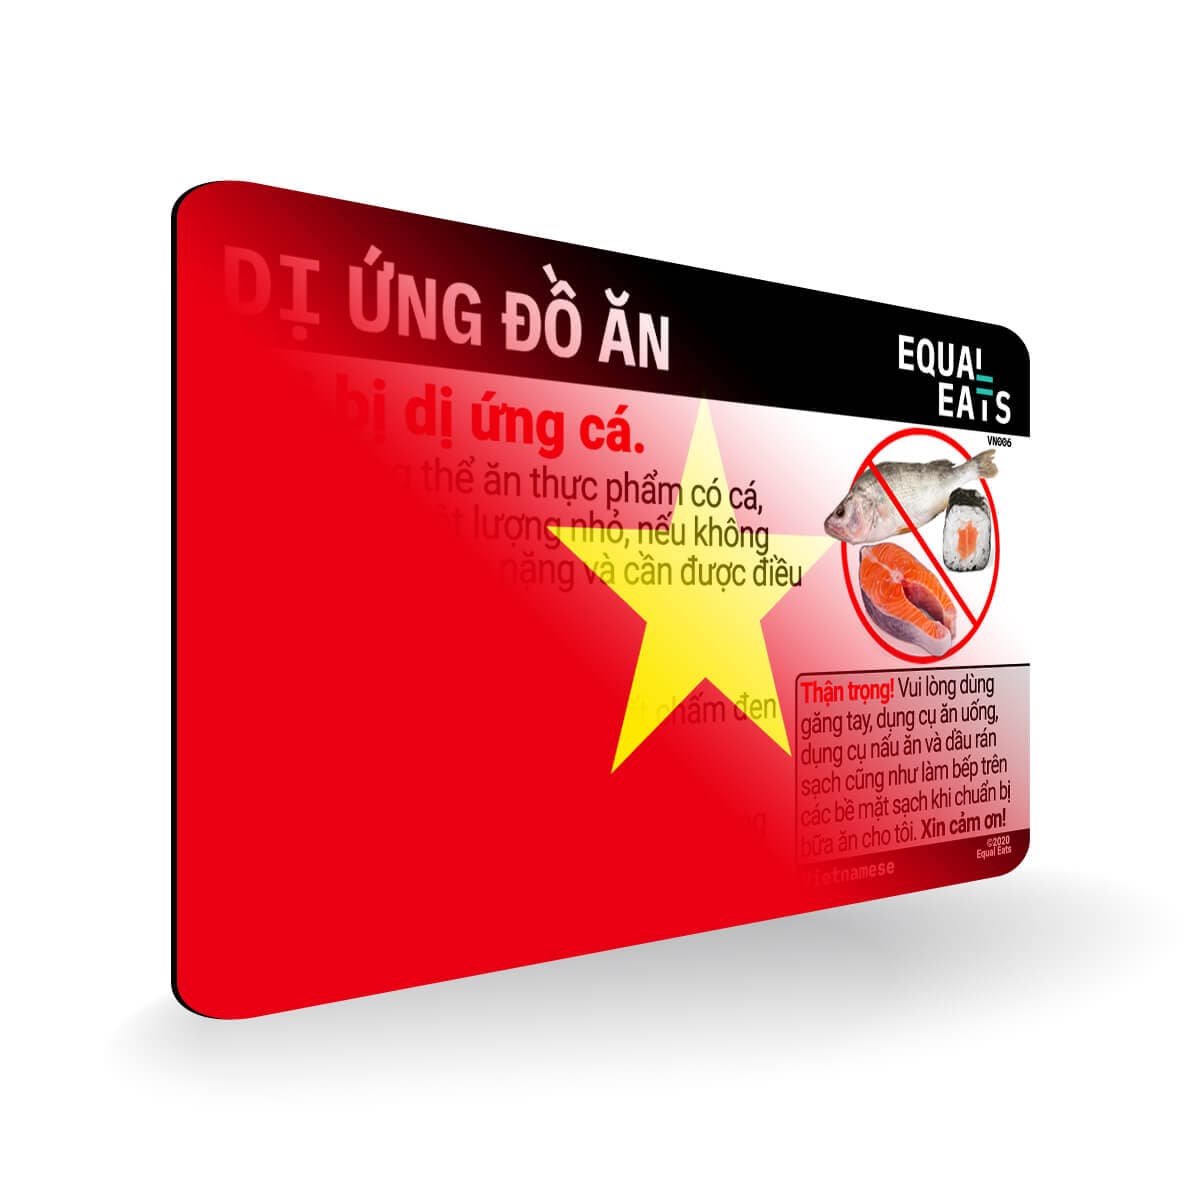 Fish Allergy in Vietnamese. Fish Allergy Card for Vietnam